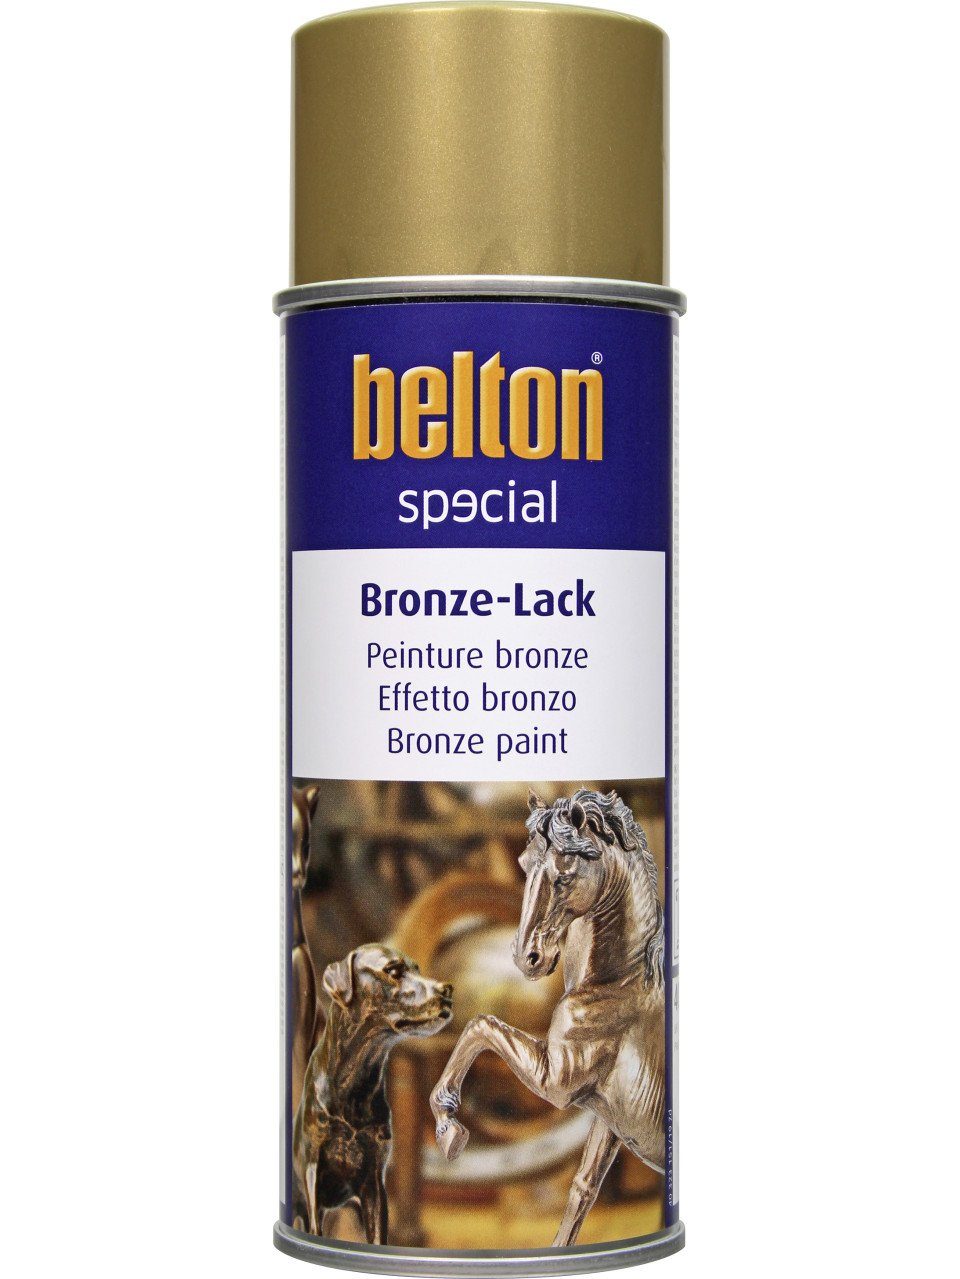 belton Sprühlack Belton special Bronze-Lack 400 ml gold